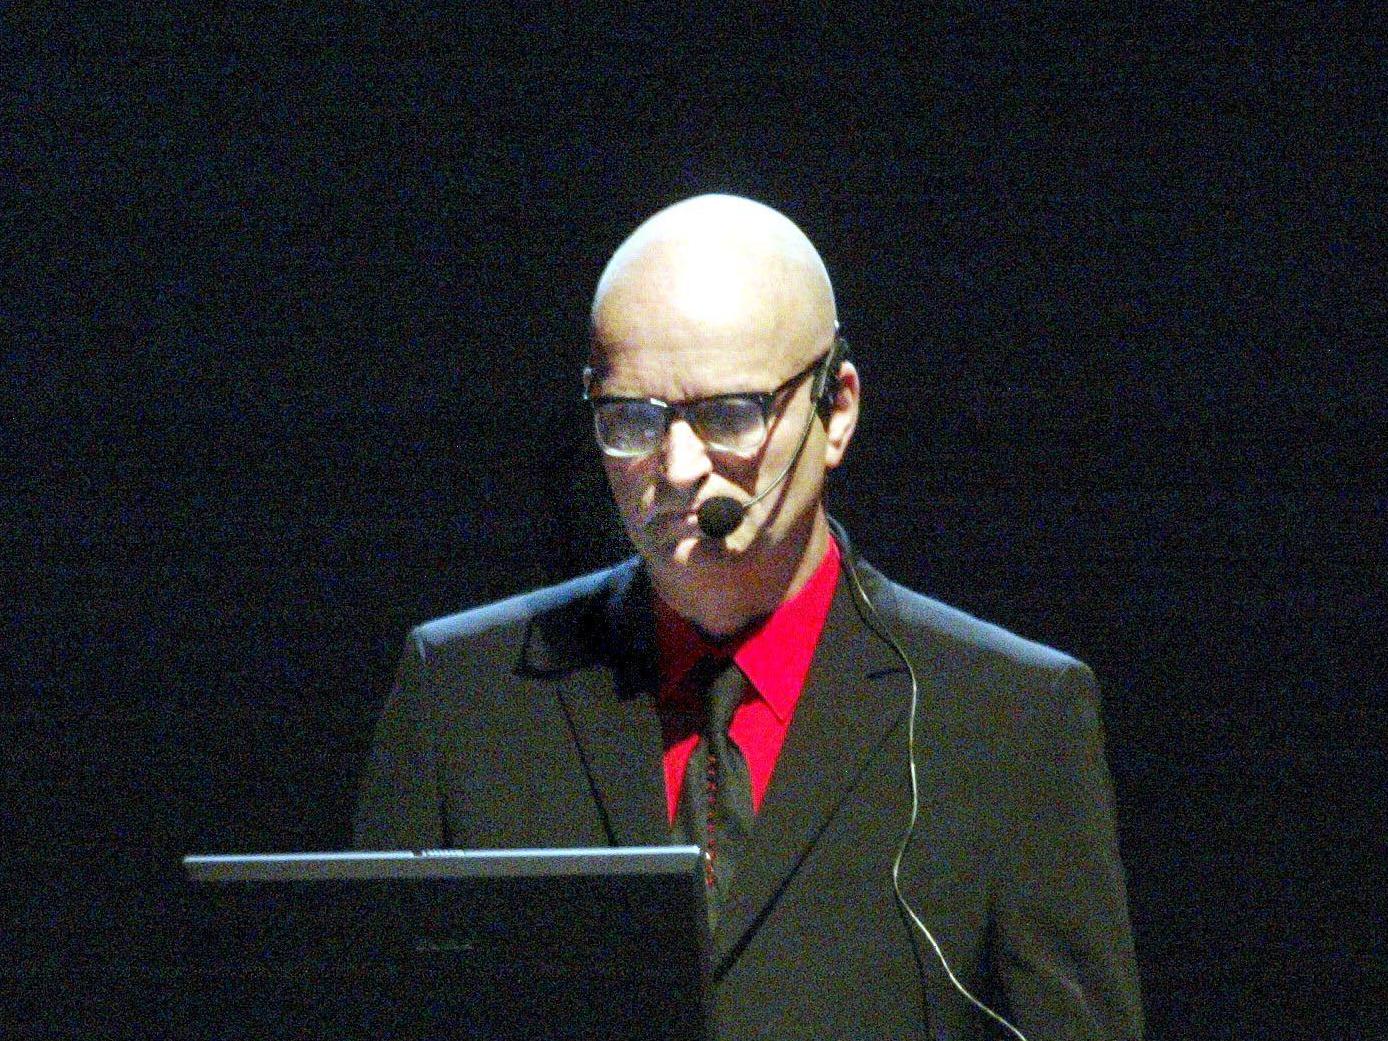 Schneider performing live in Helsinki with Kraftwerk in 2004